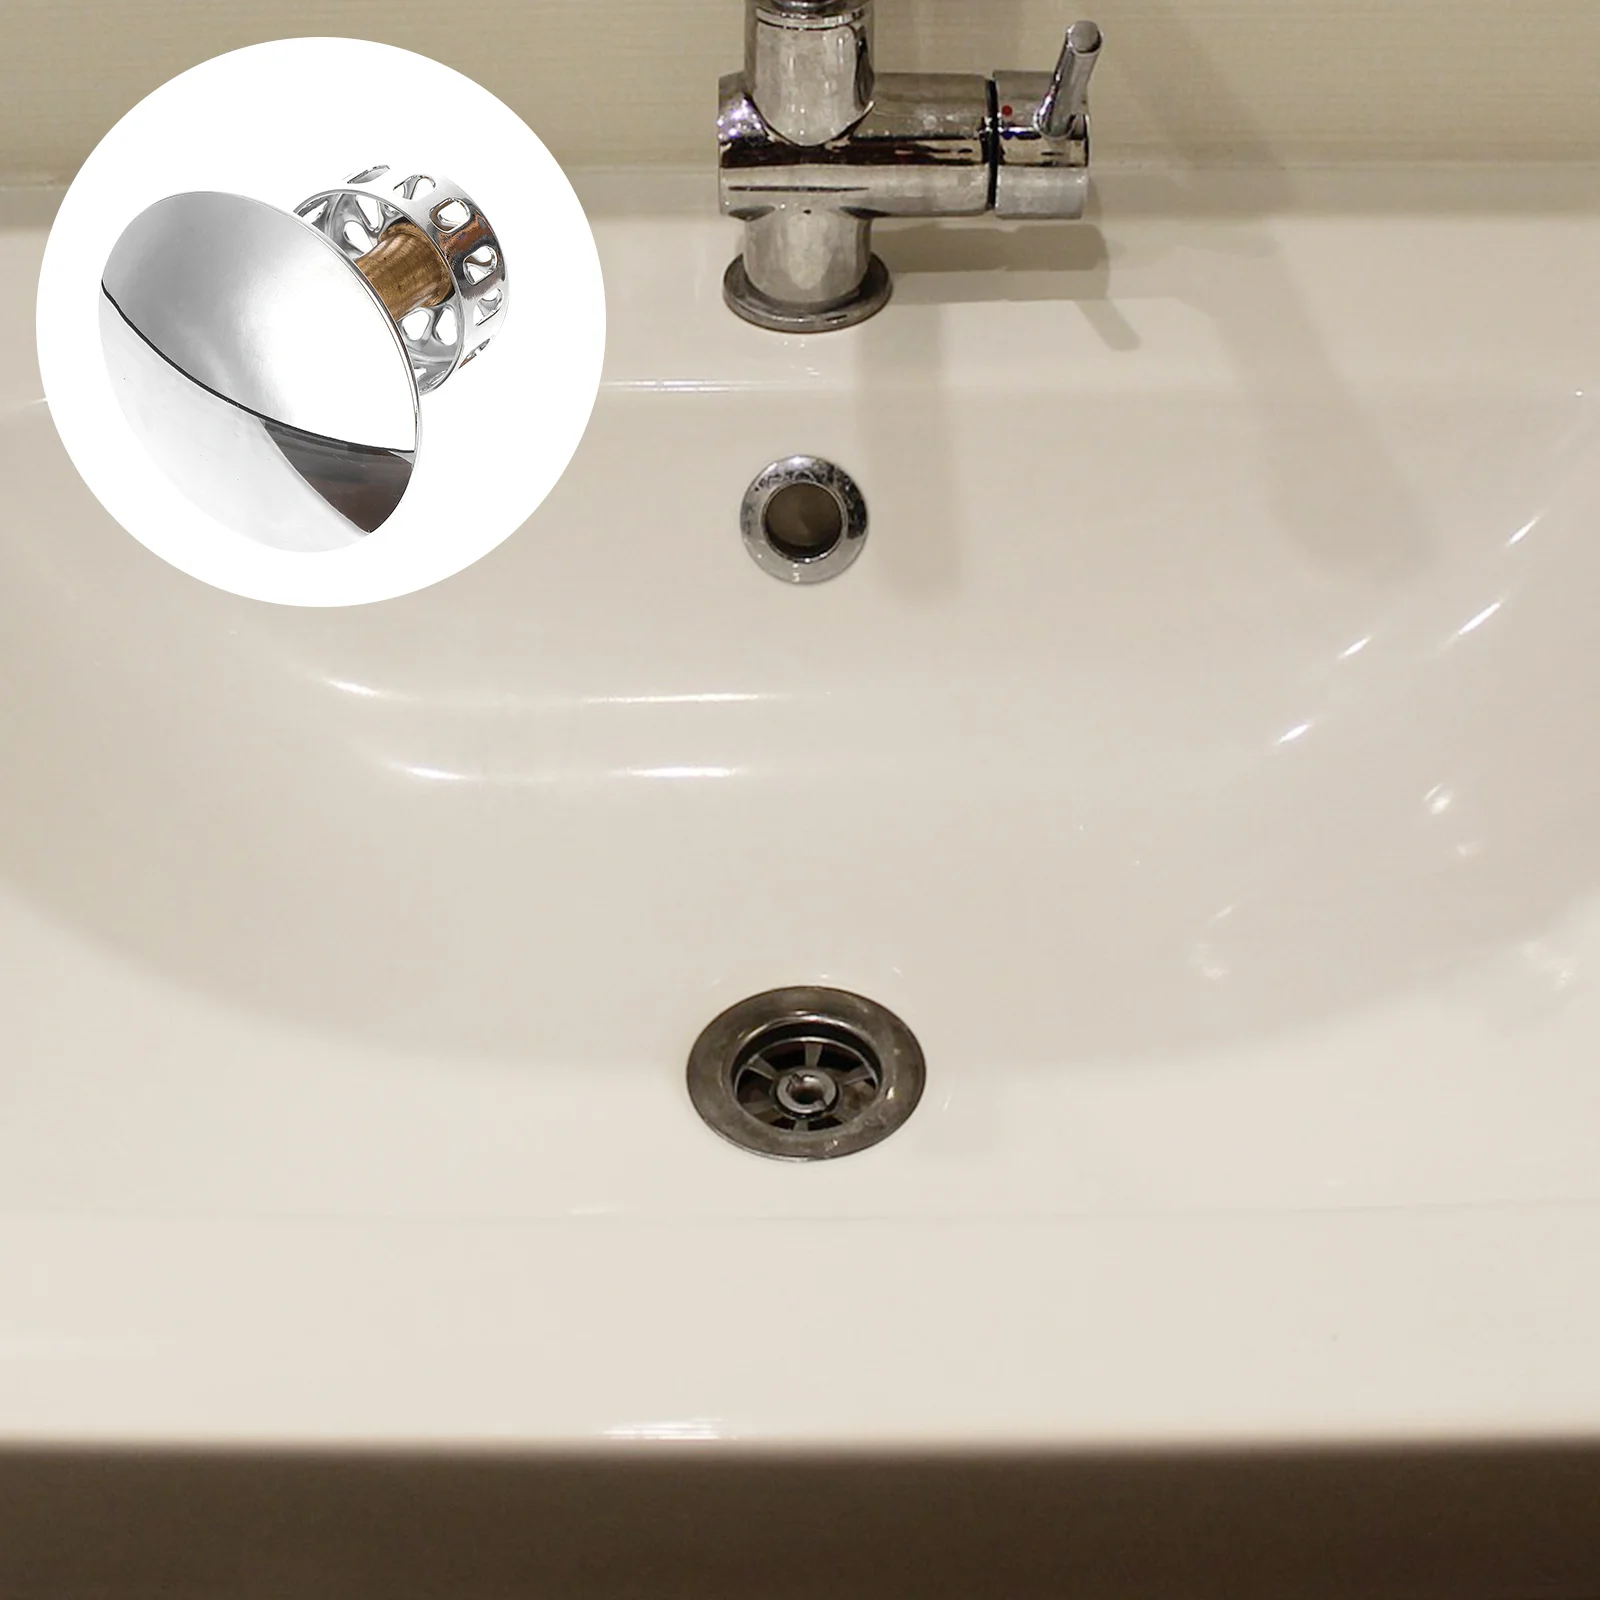 

Sink Drain Bathroom Hair Catcher Strainer Stopper Plug Shower Tub Bath Metal Cover Drainer Up Waste Bathtub Bounce Bullet Type